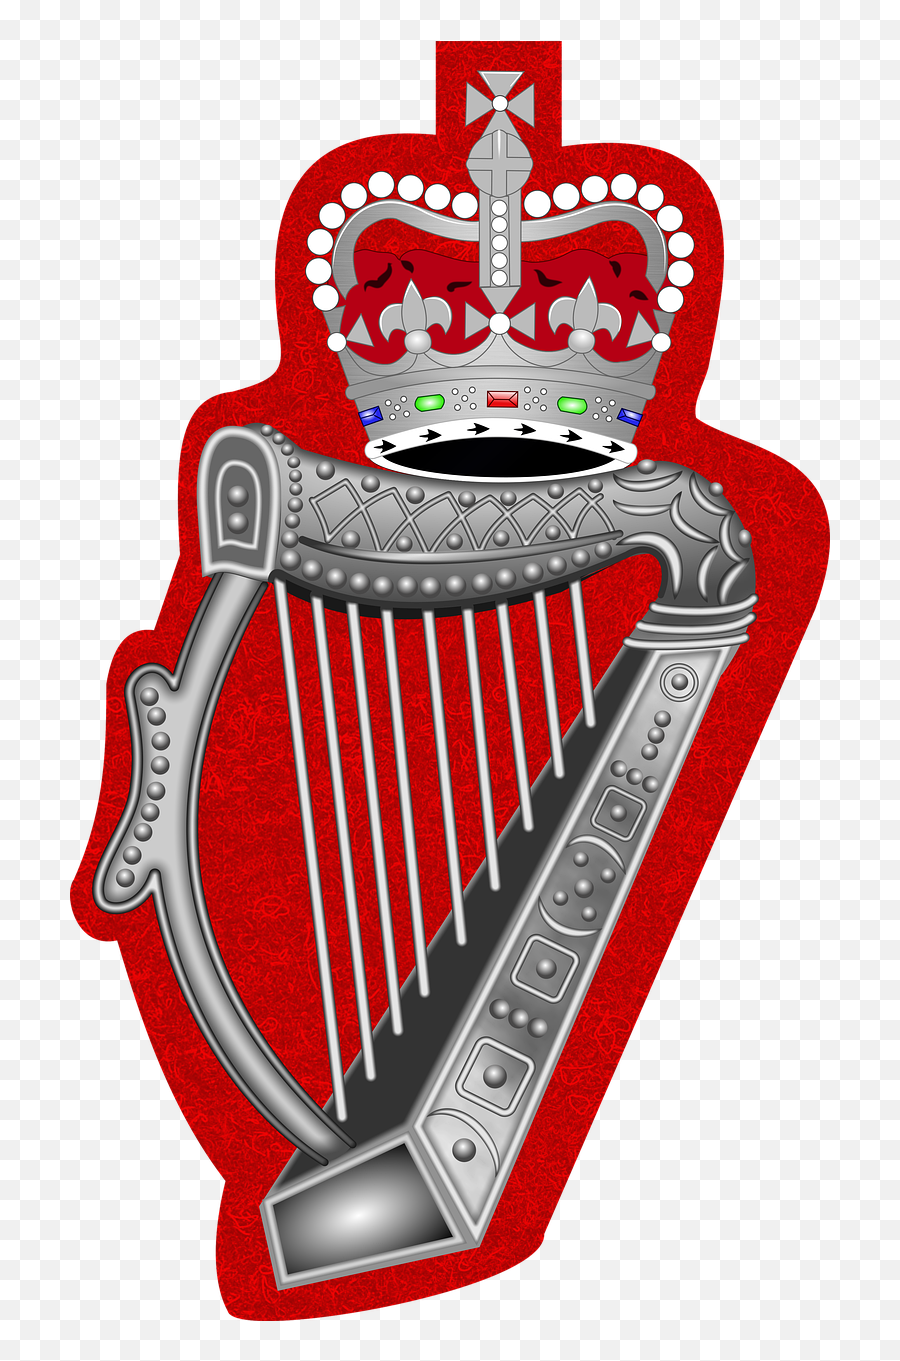 Royal Ulster Constabulary Cap - Free Image On Pixabay Harp And Crown Badge Png,Harp Icon